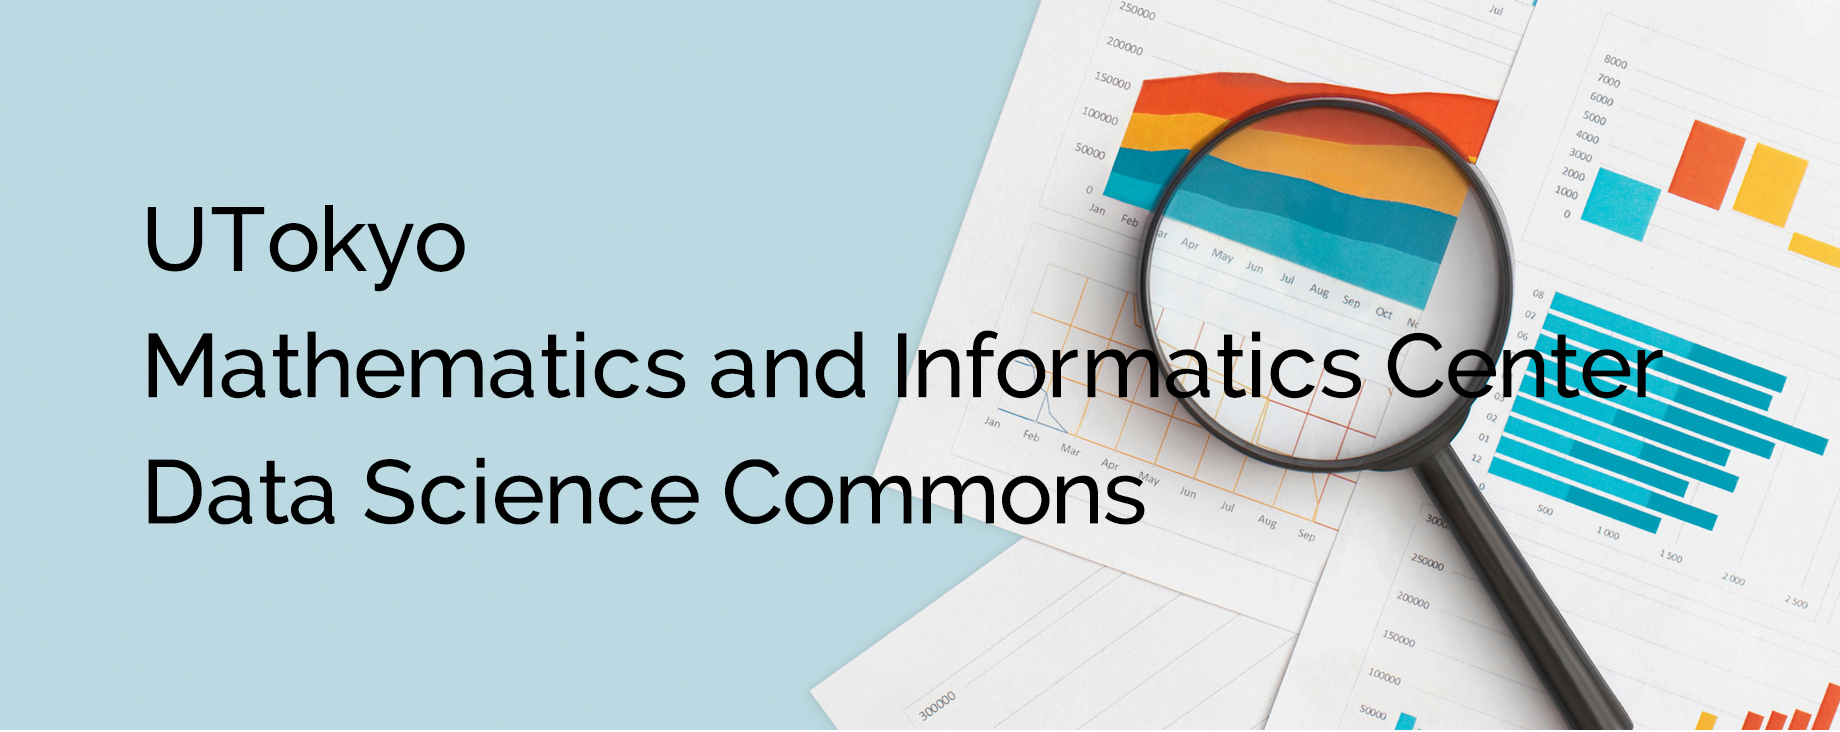 UTokyo Mathematics and Informatics Center Data Science Commons